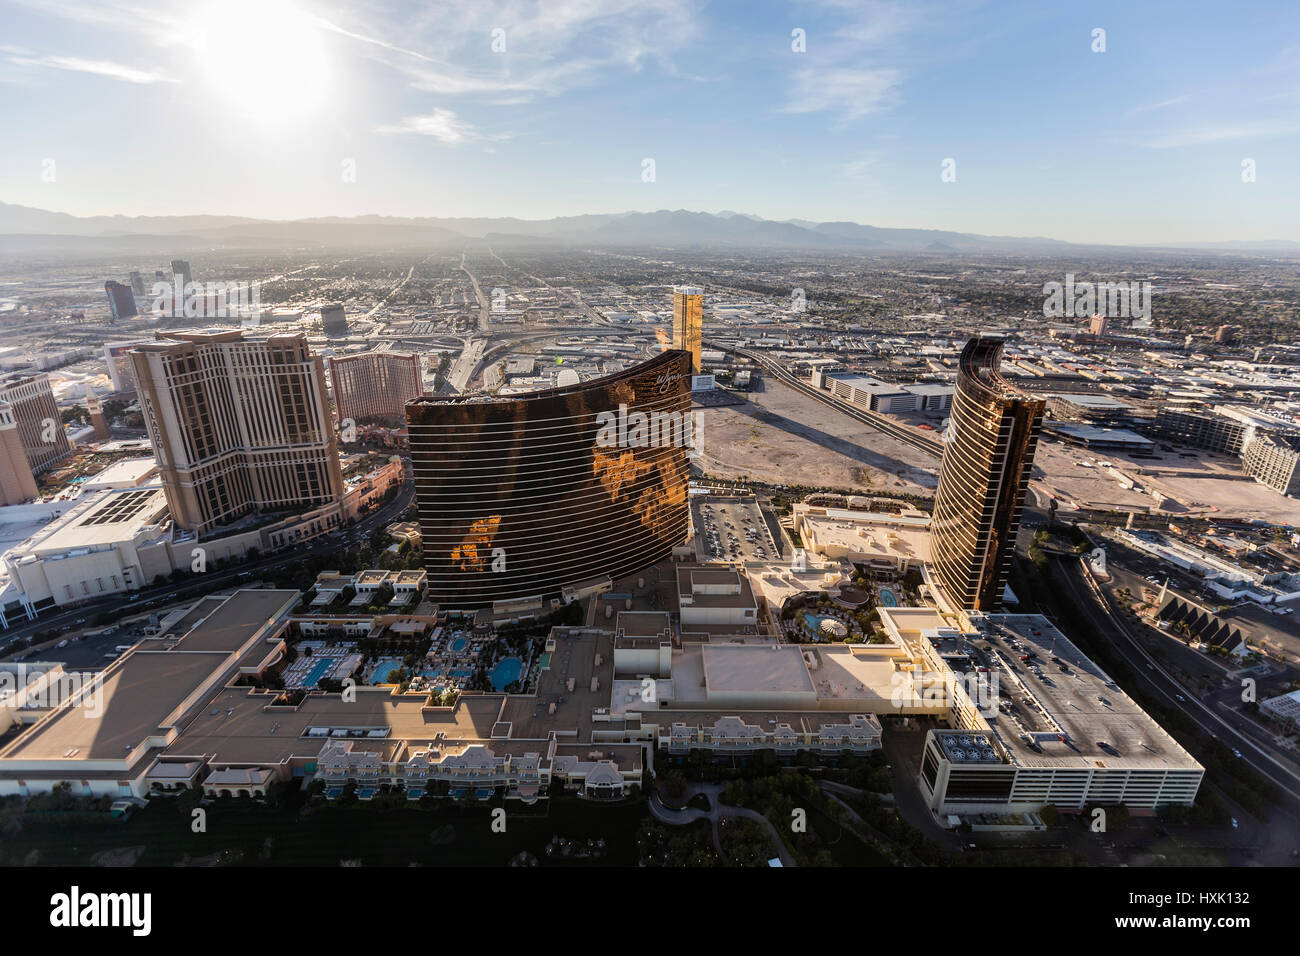 Las Vegas, Nevada, USA - March 13, 2017:  Aerial view of Las Vegas strip casino resort towers in Southern Nevada. Stock Photo